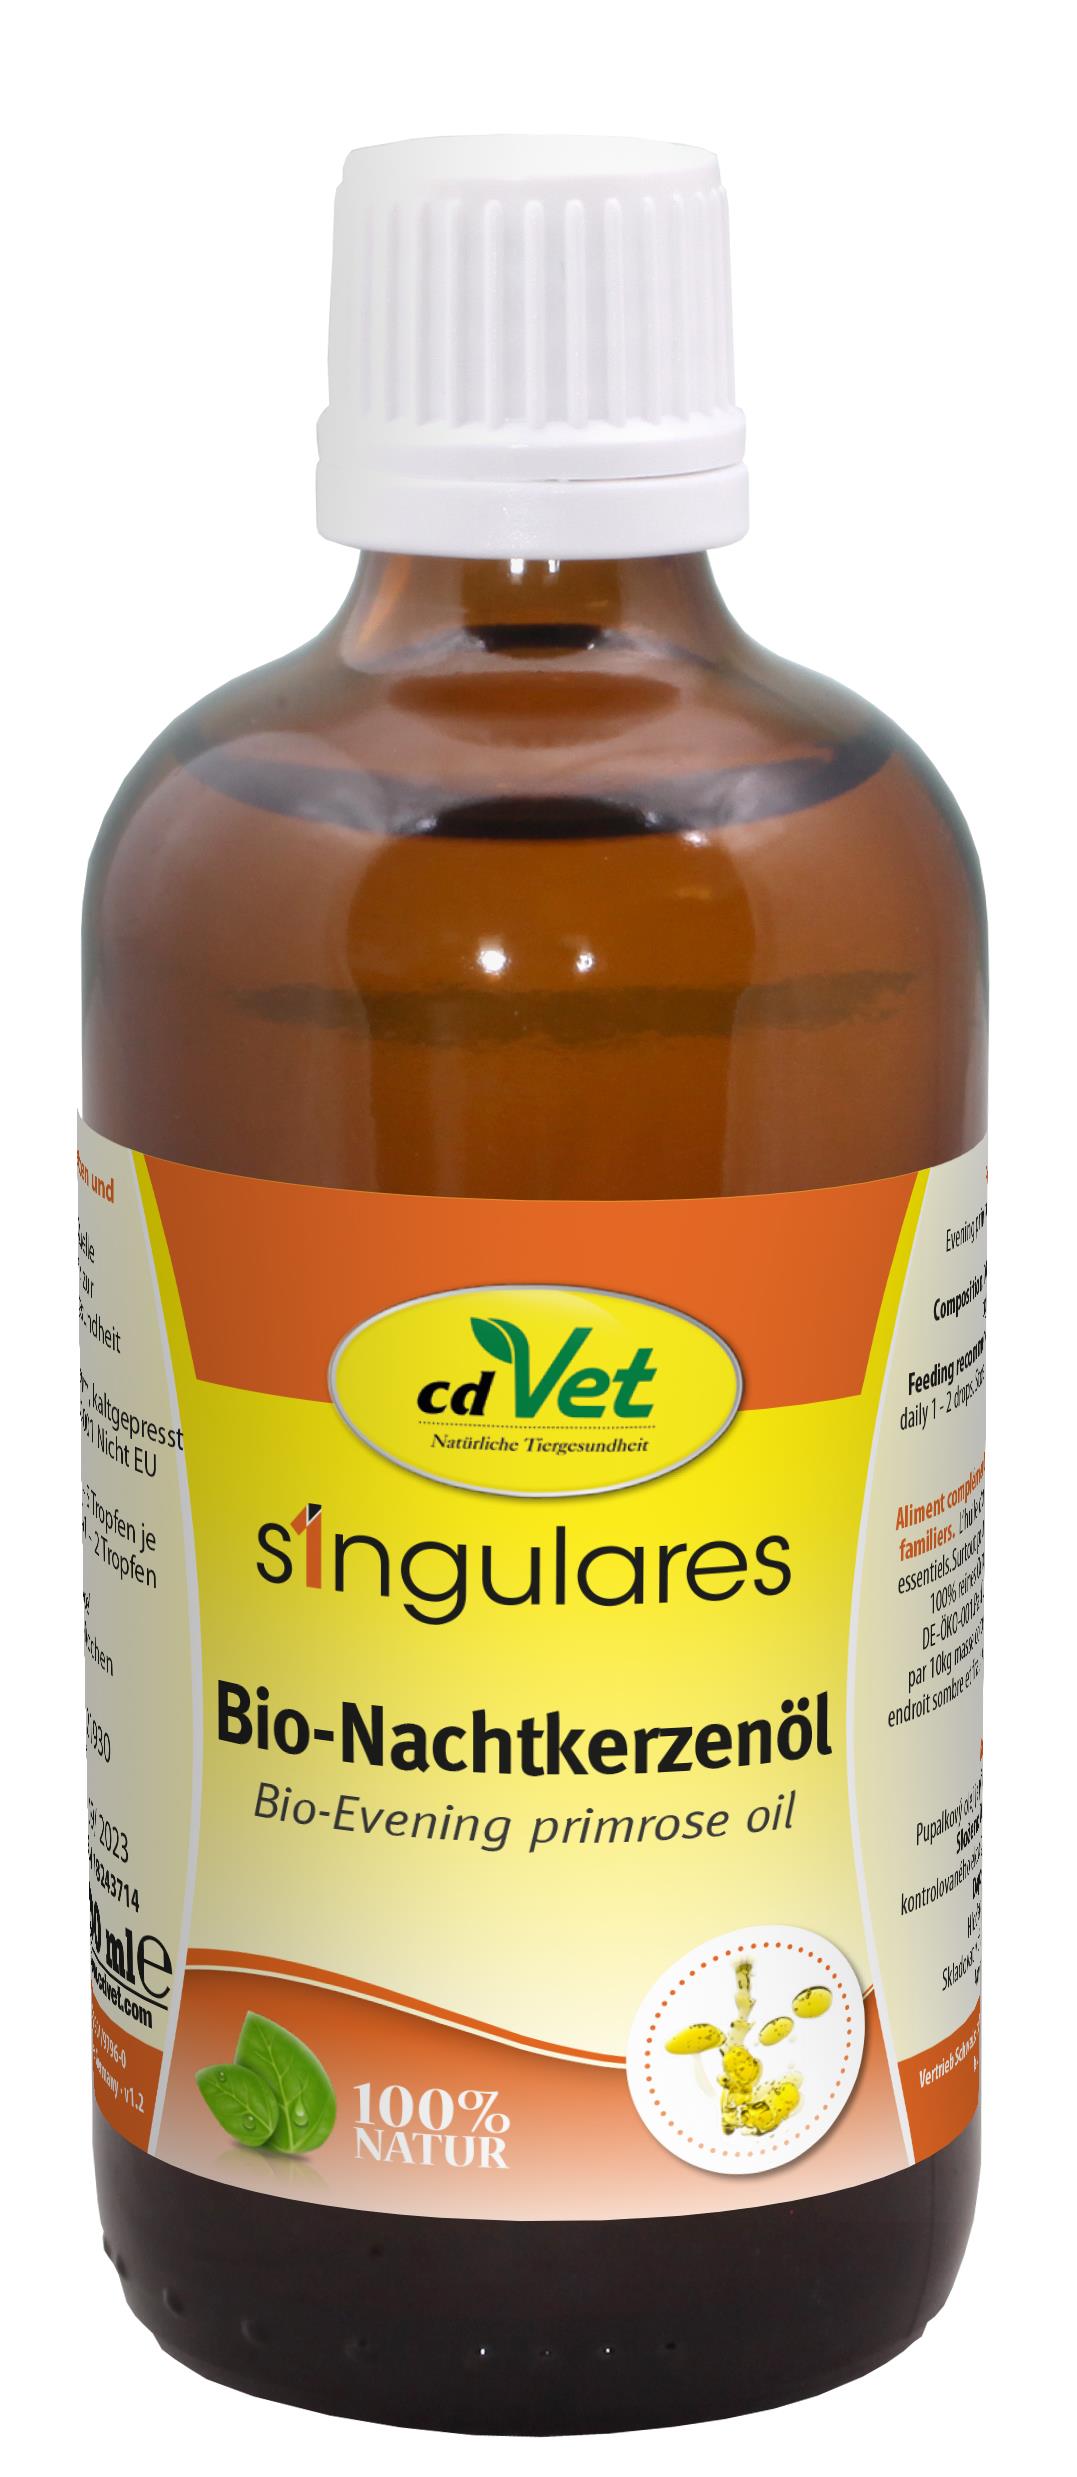 Singulares Bio-Nachtkerzenöl 100 ml